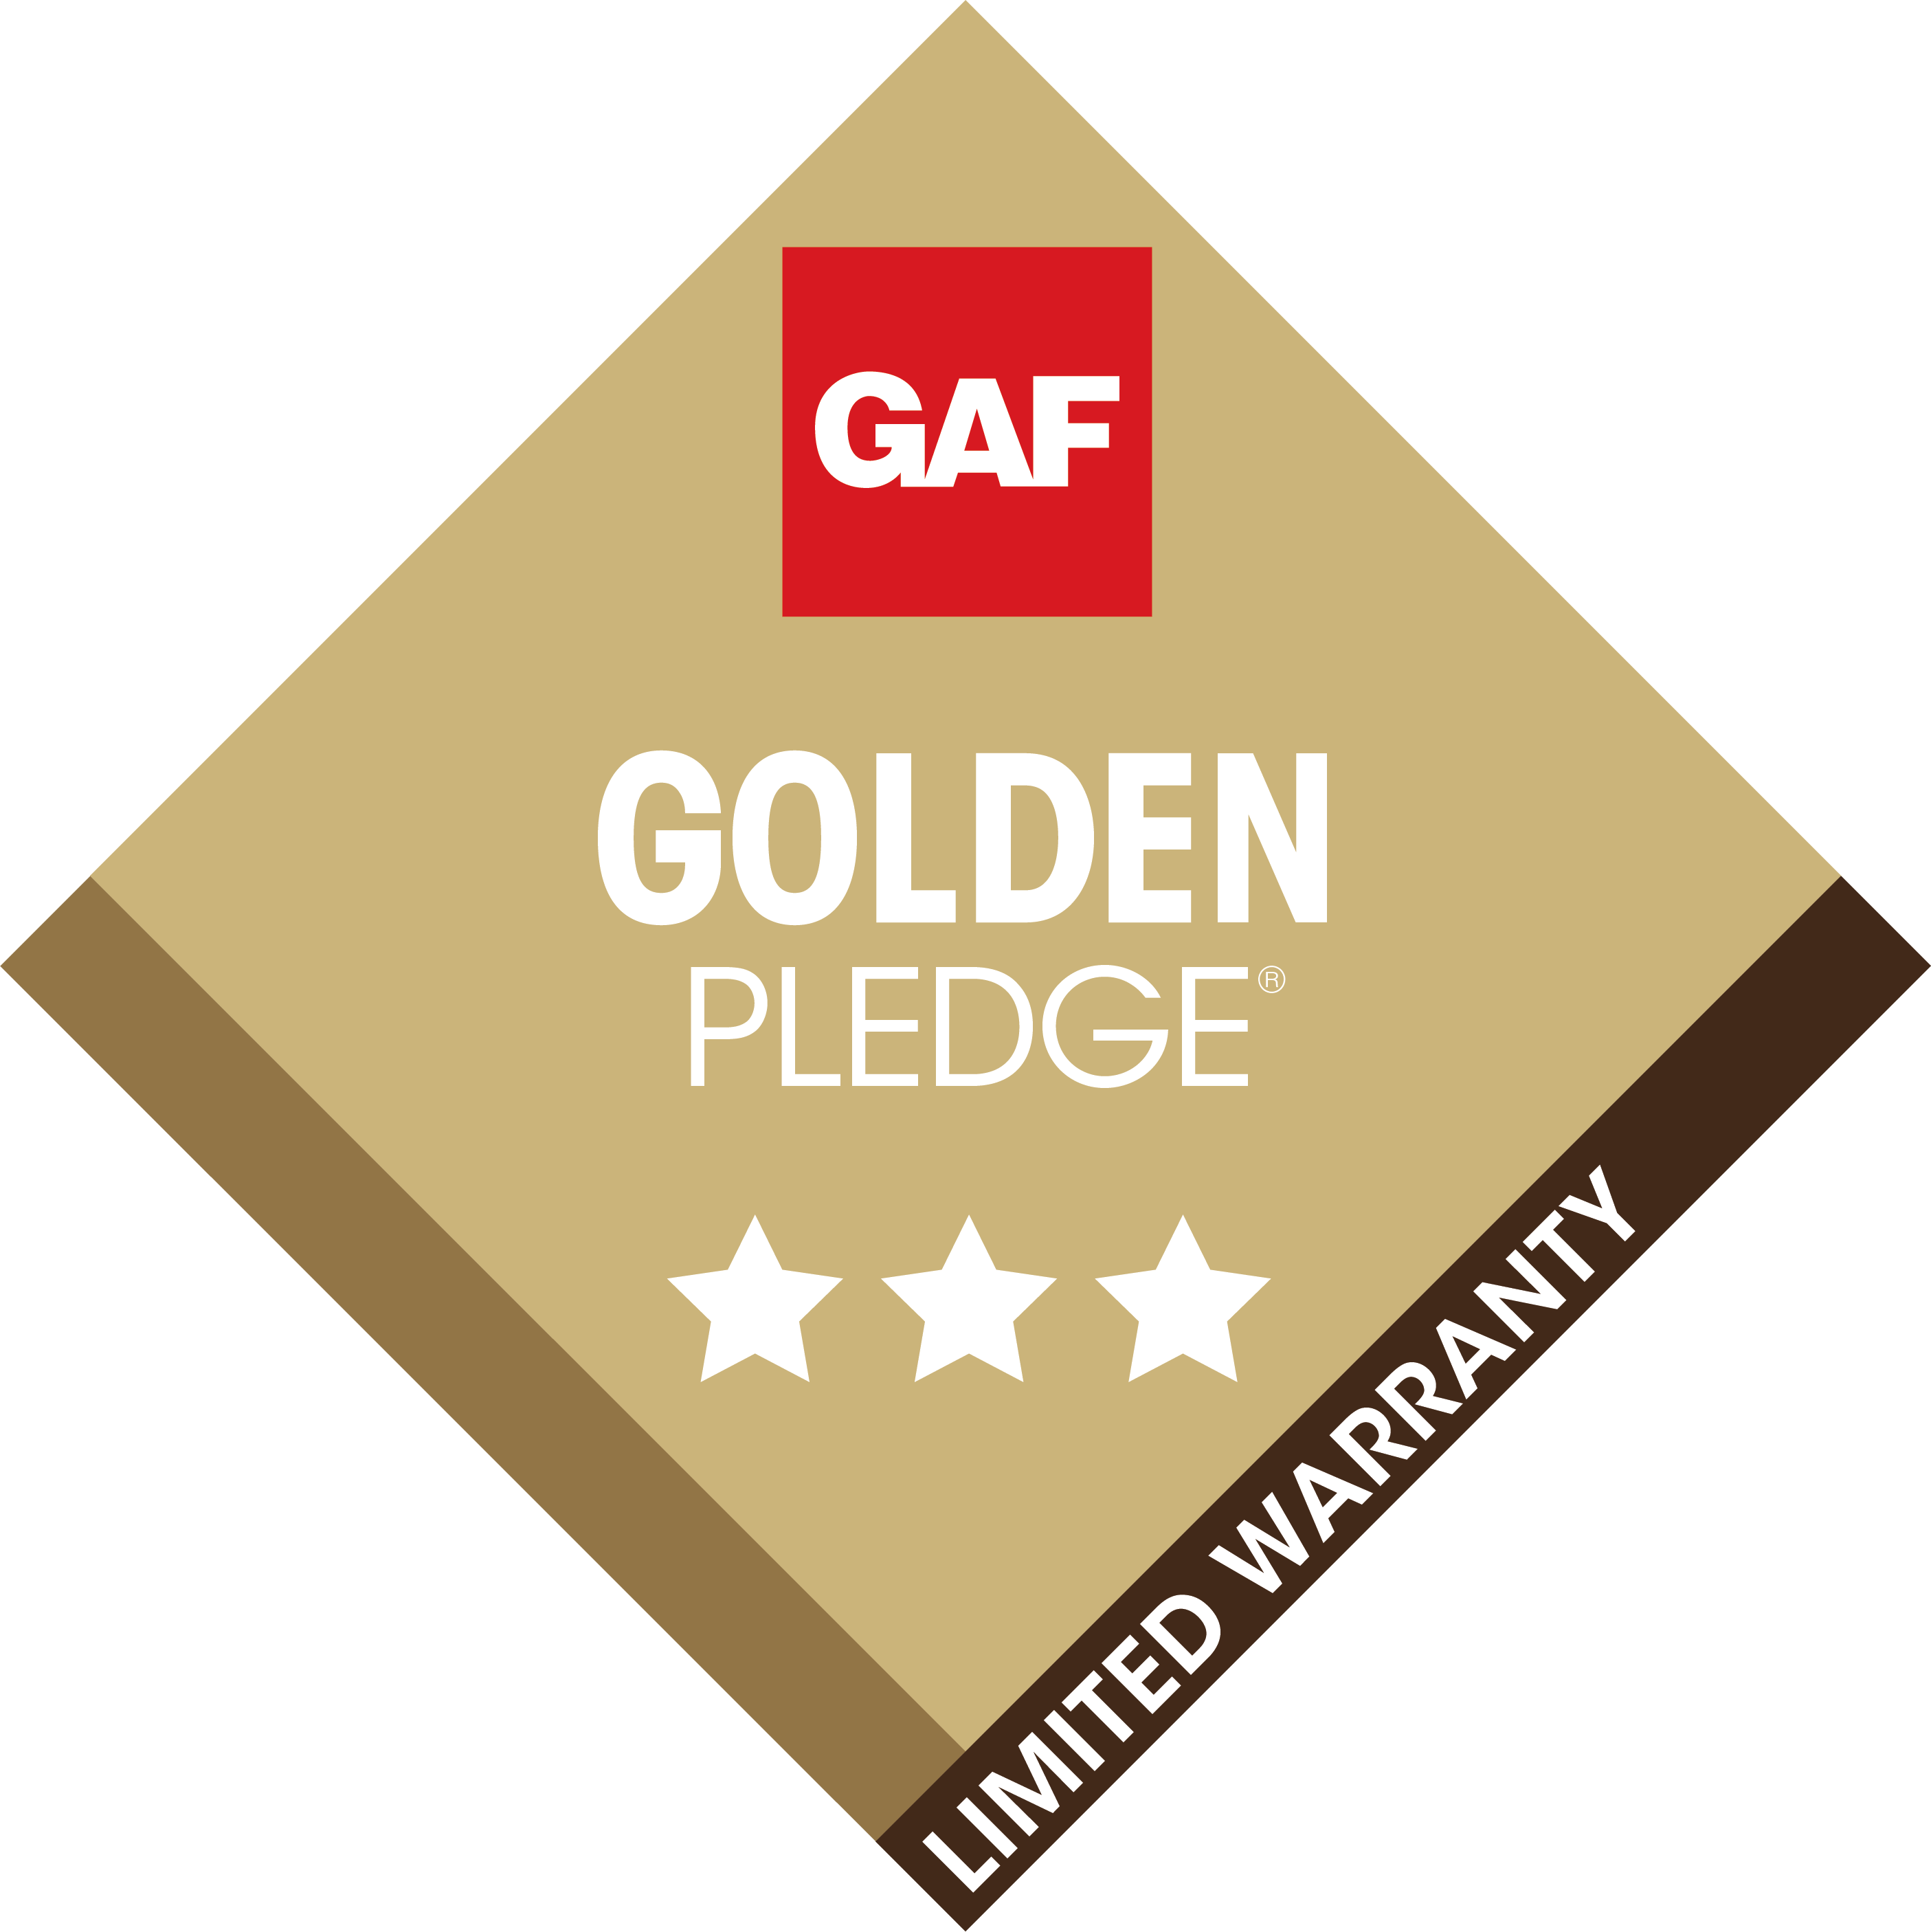 GAF golden pledge roofing contractor